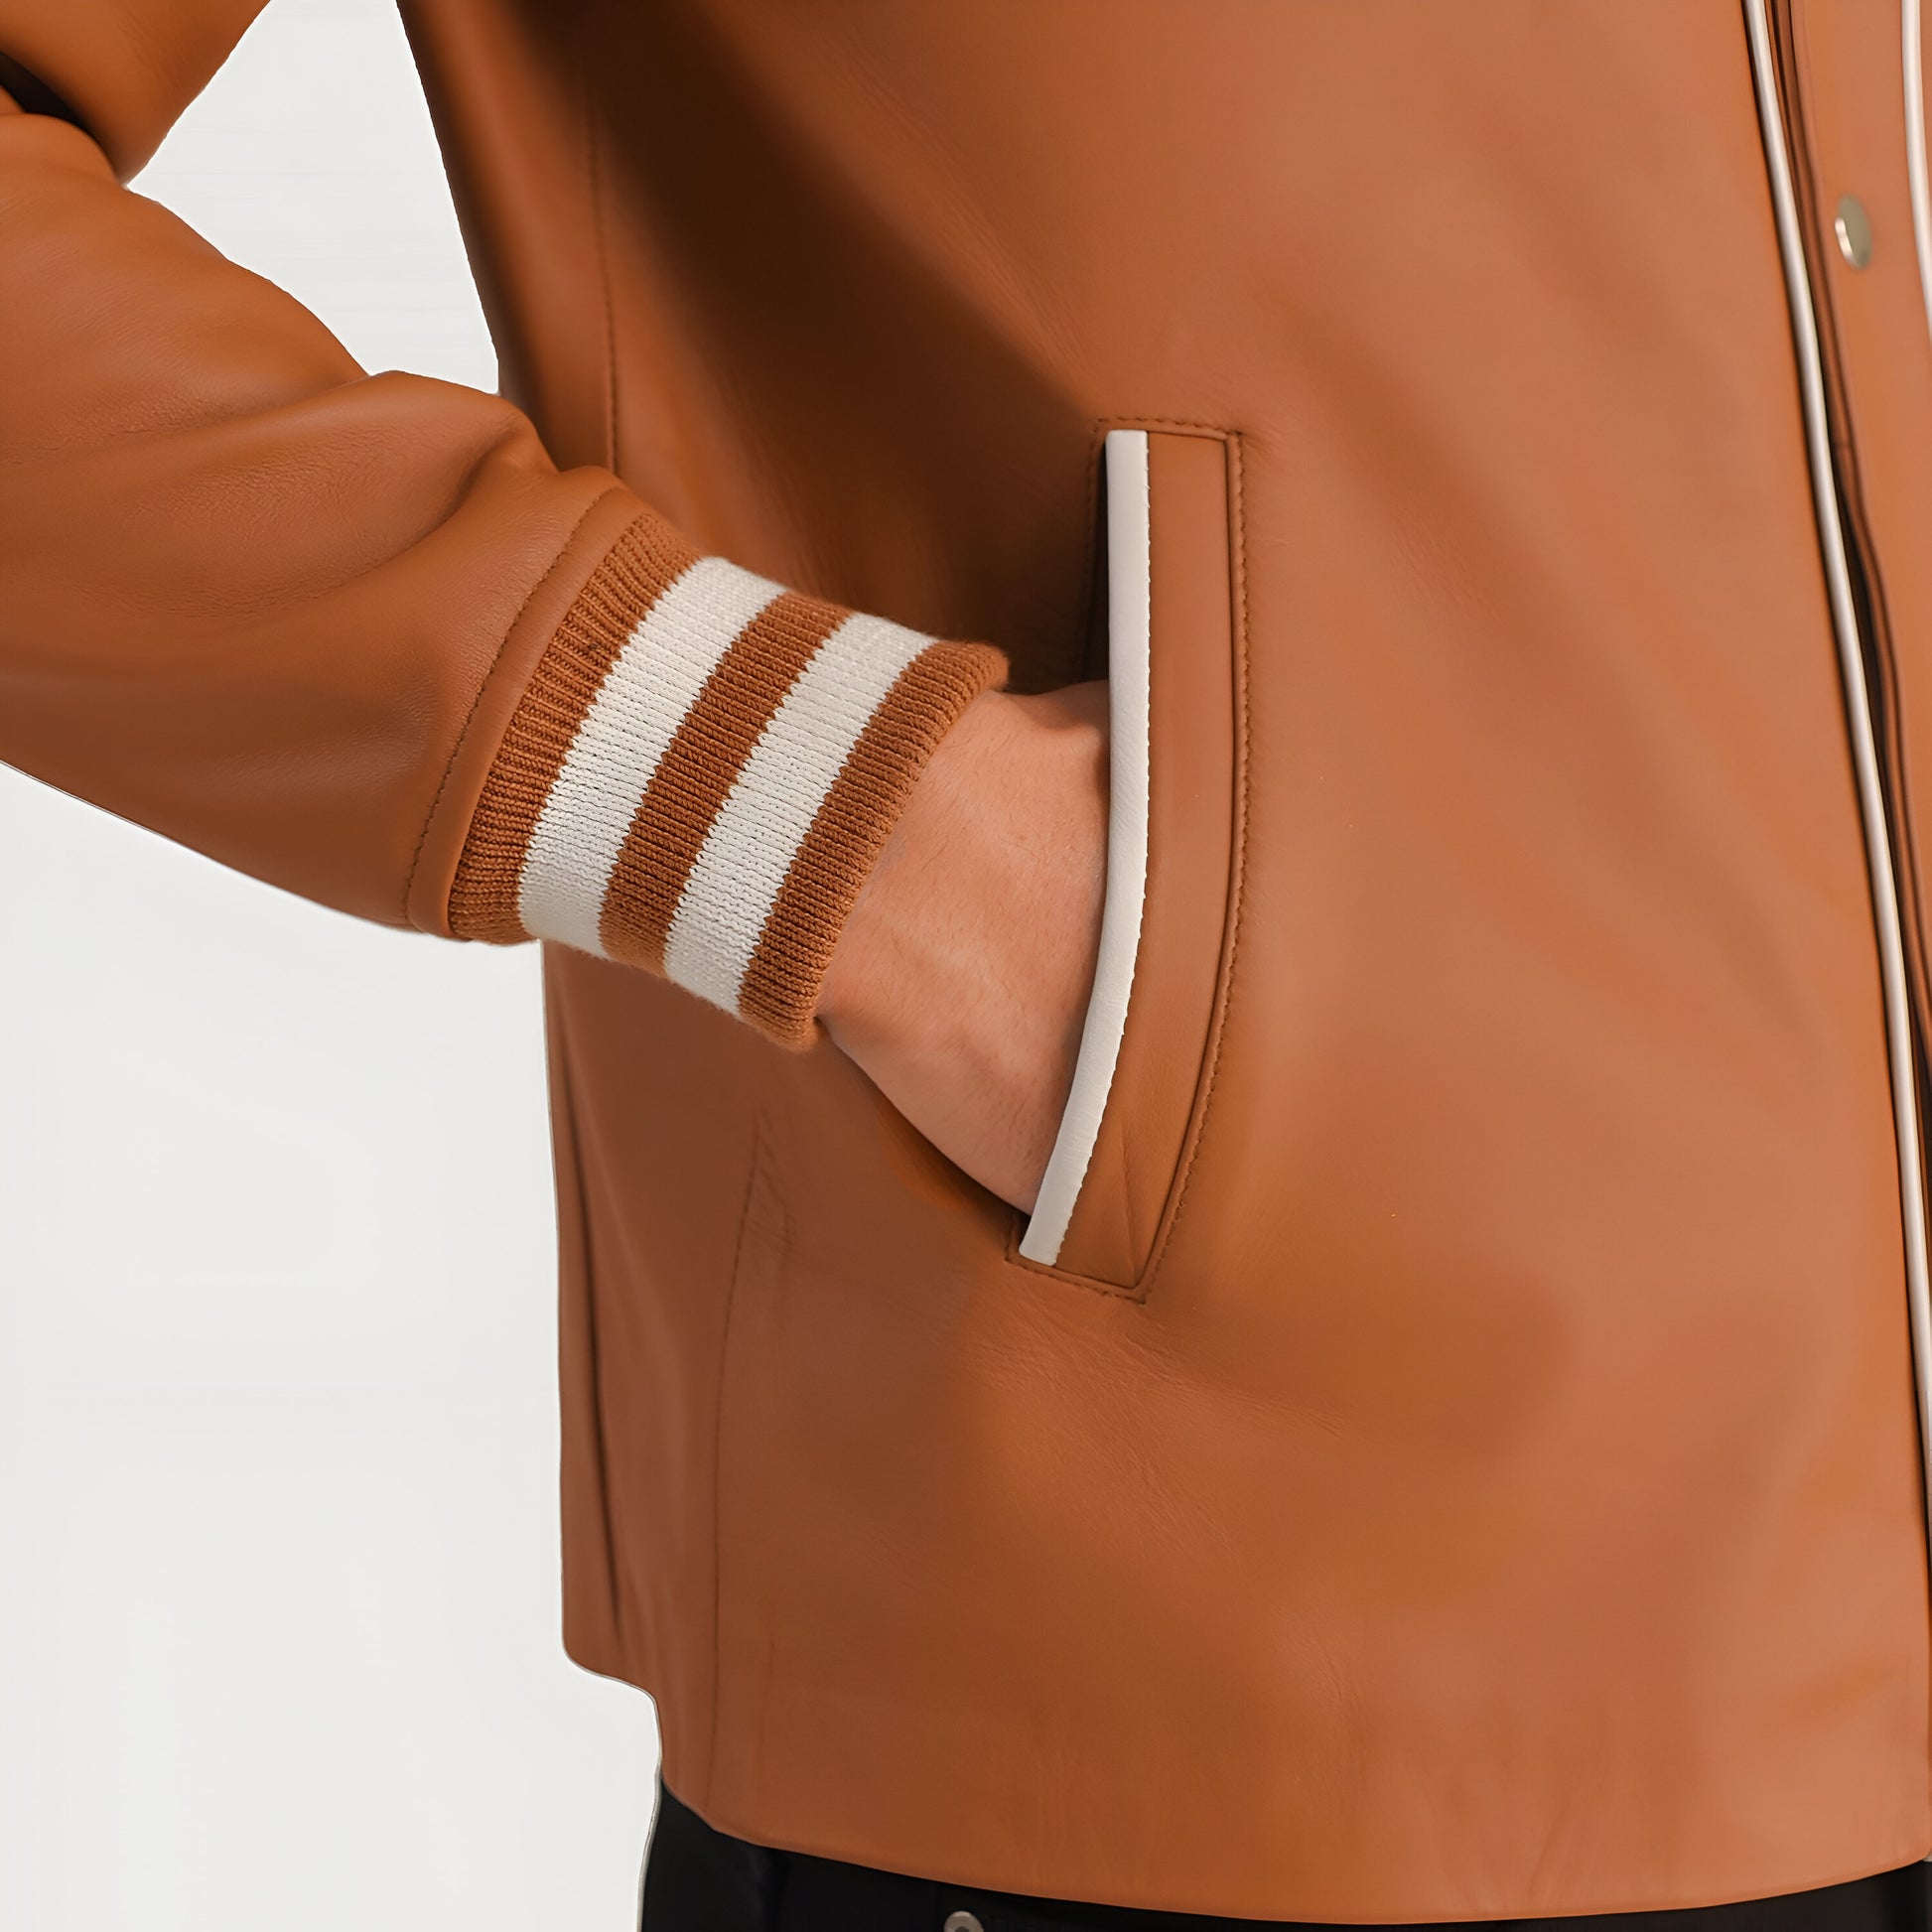 Mariano Rivera Brown Leather Varsity Jacket